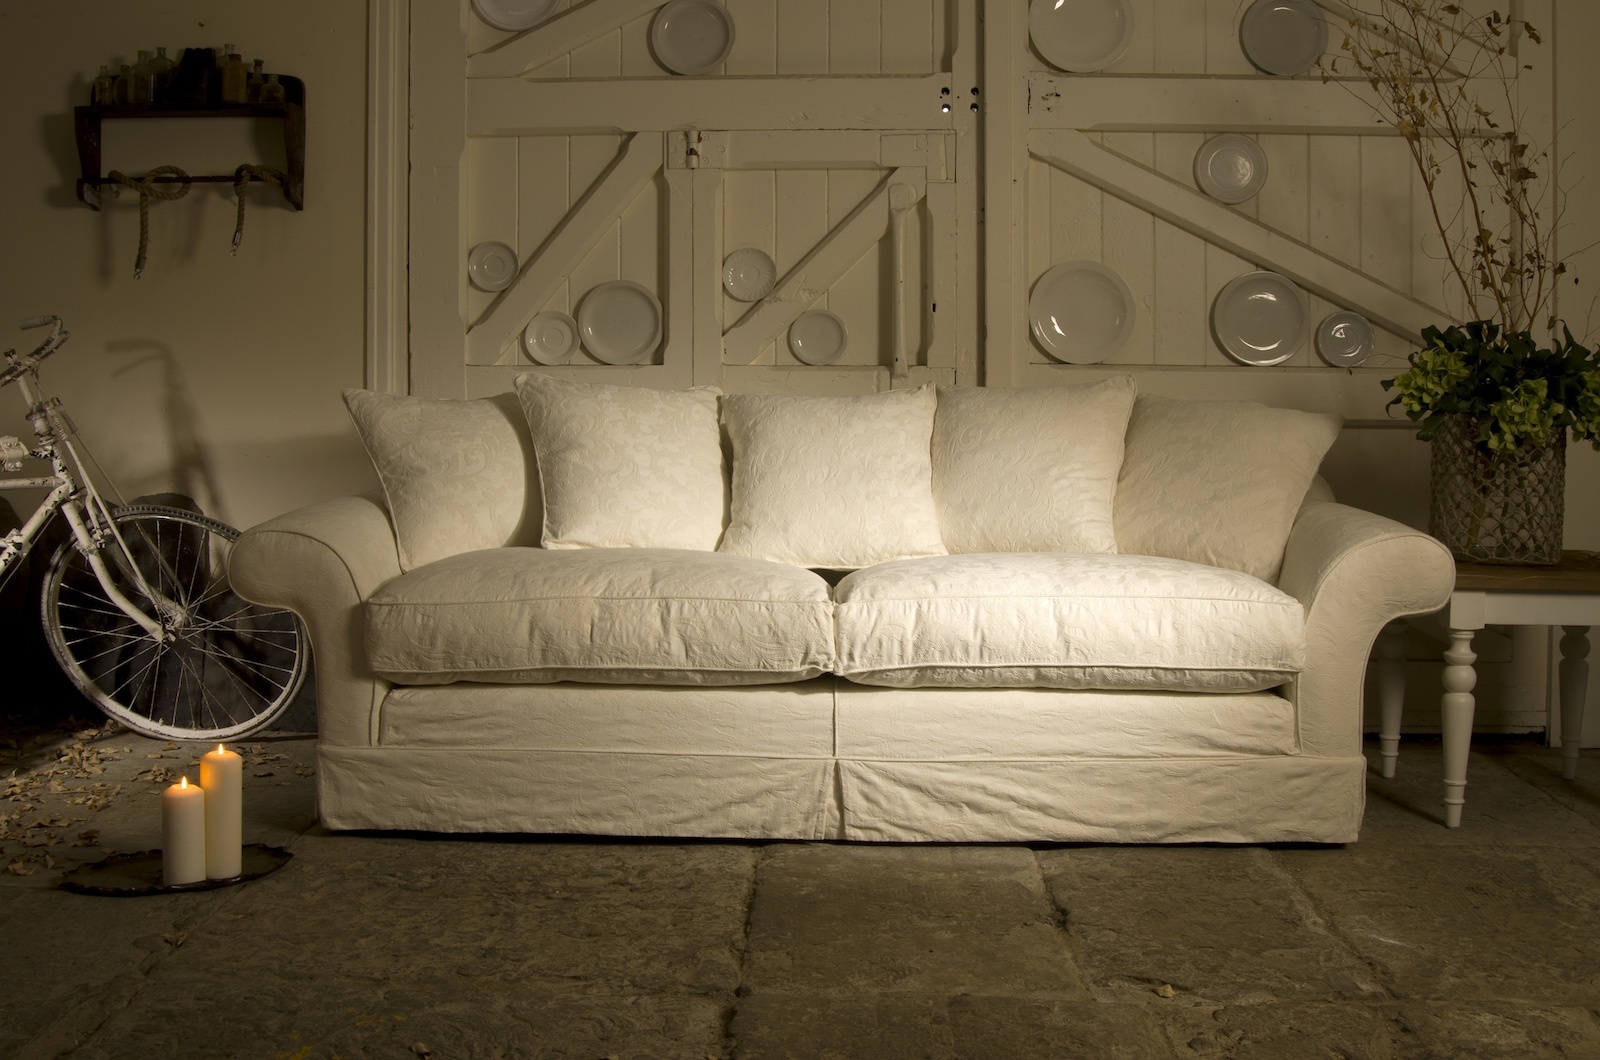 tetrad alicia sofa bed